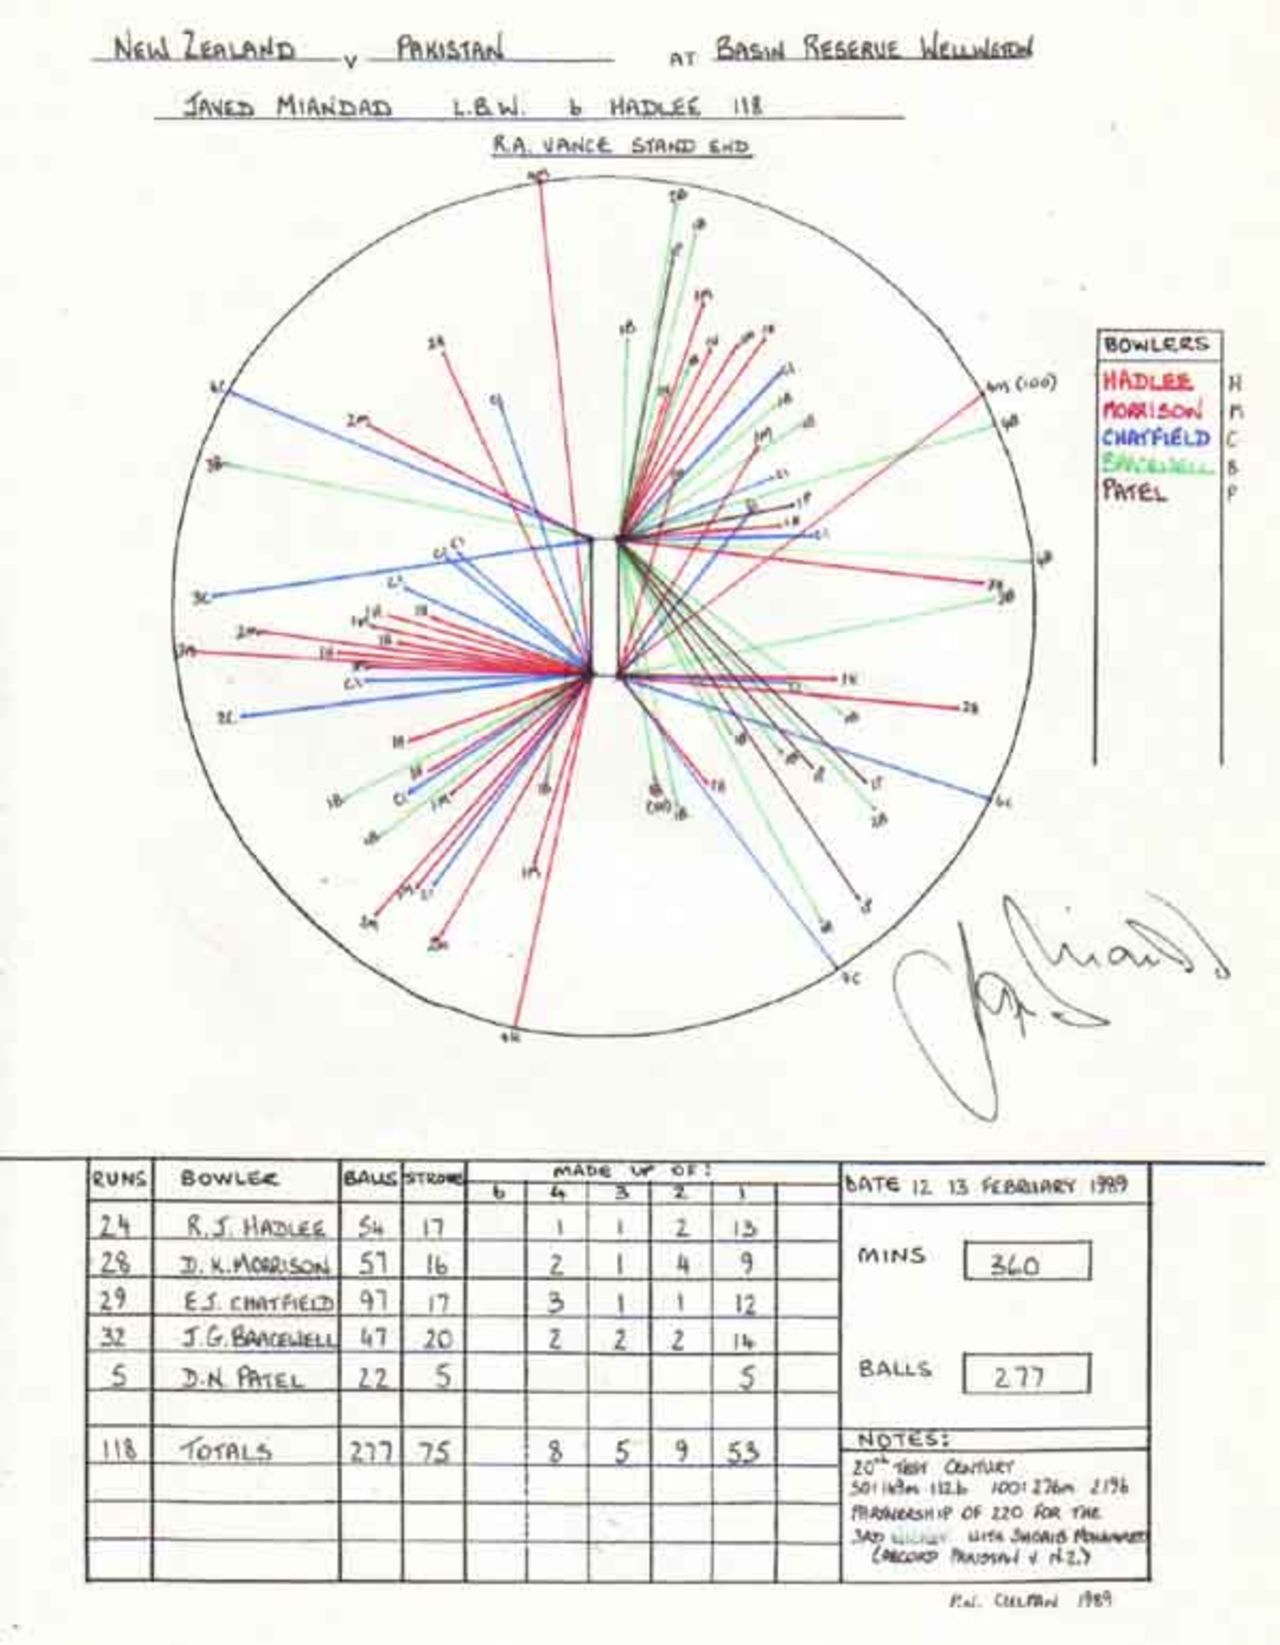 Wagon Wheel of Javed Miandad's 118 v New Zealand, Basin Reserve, Wellington 12-13 February 1989